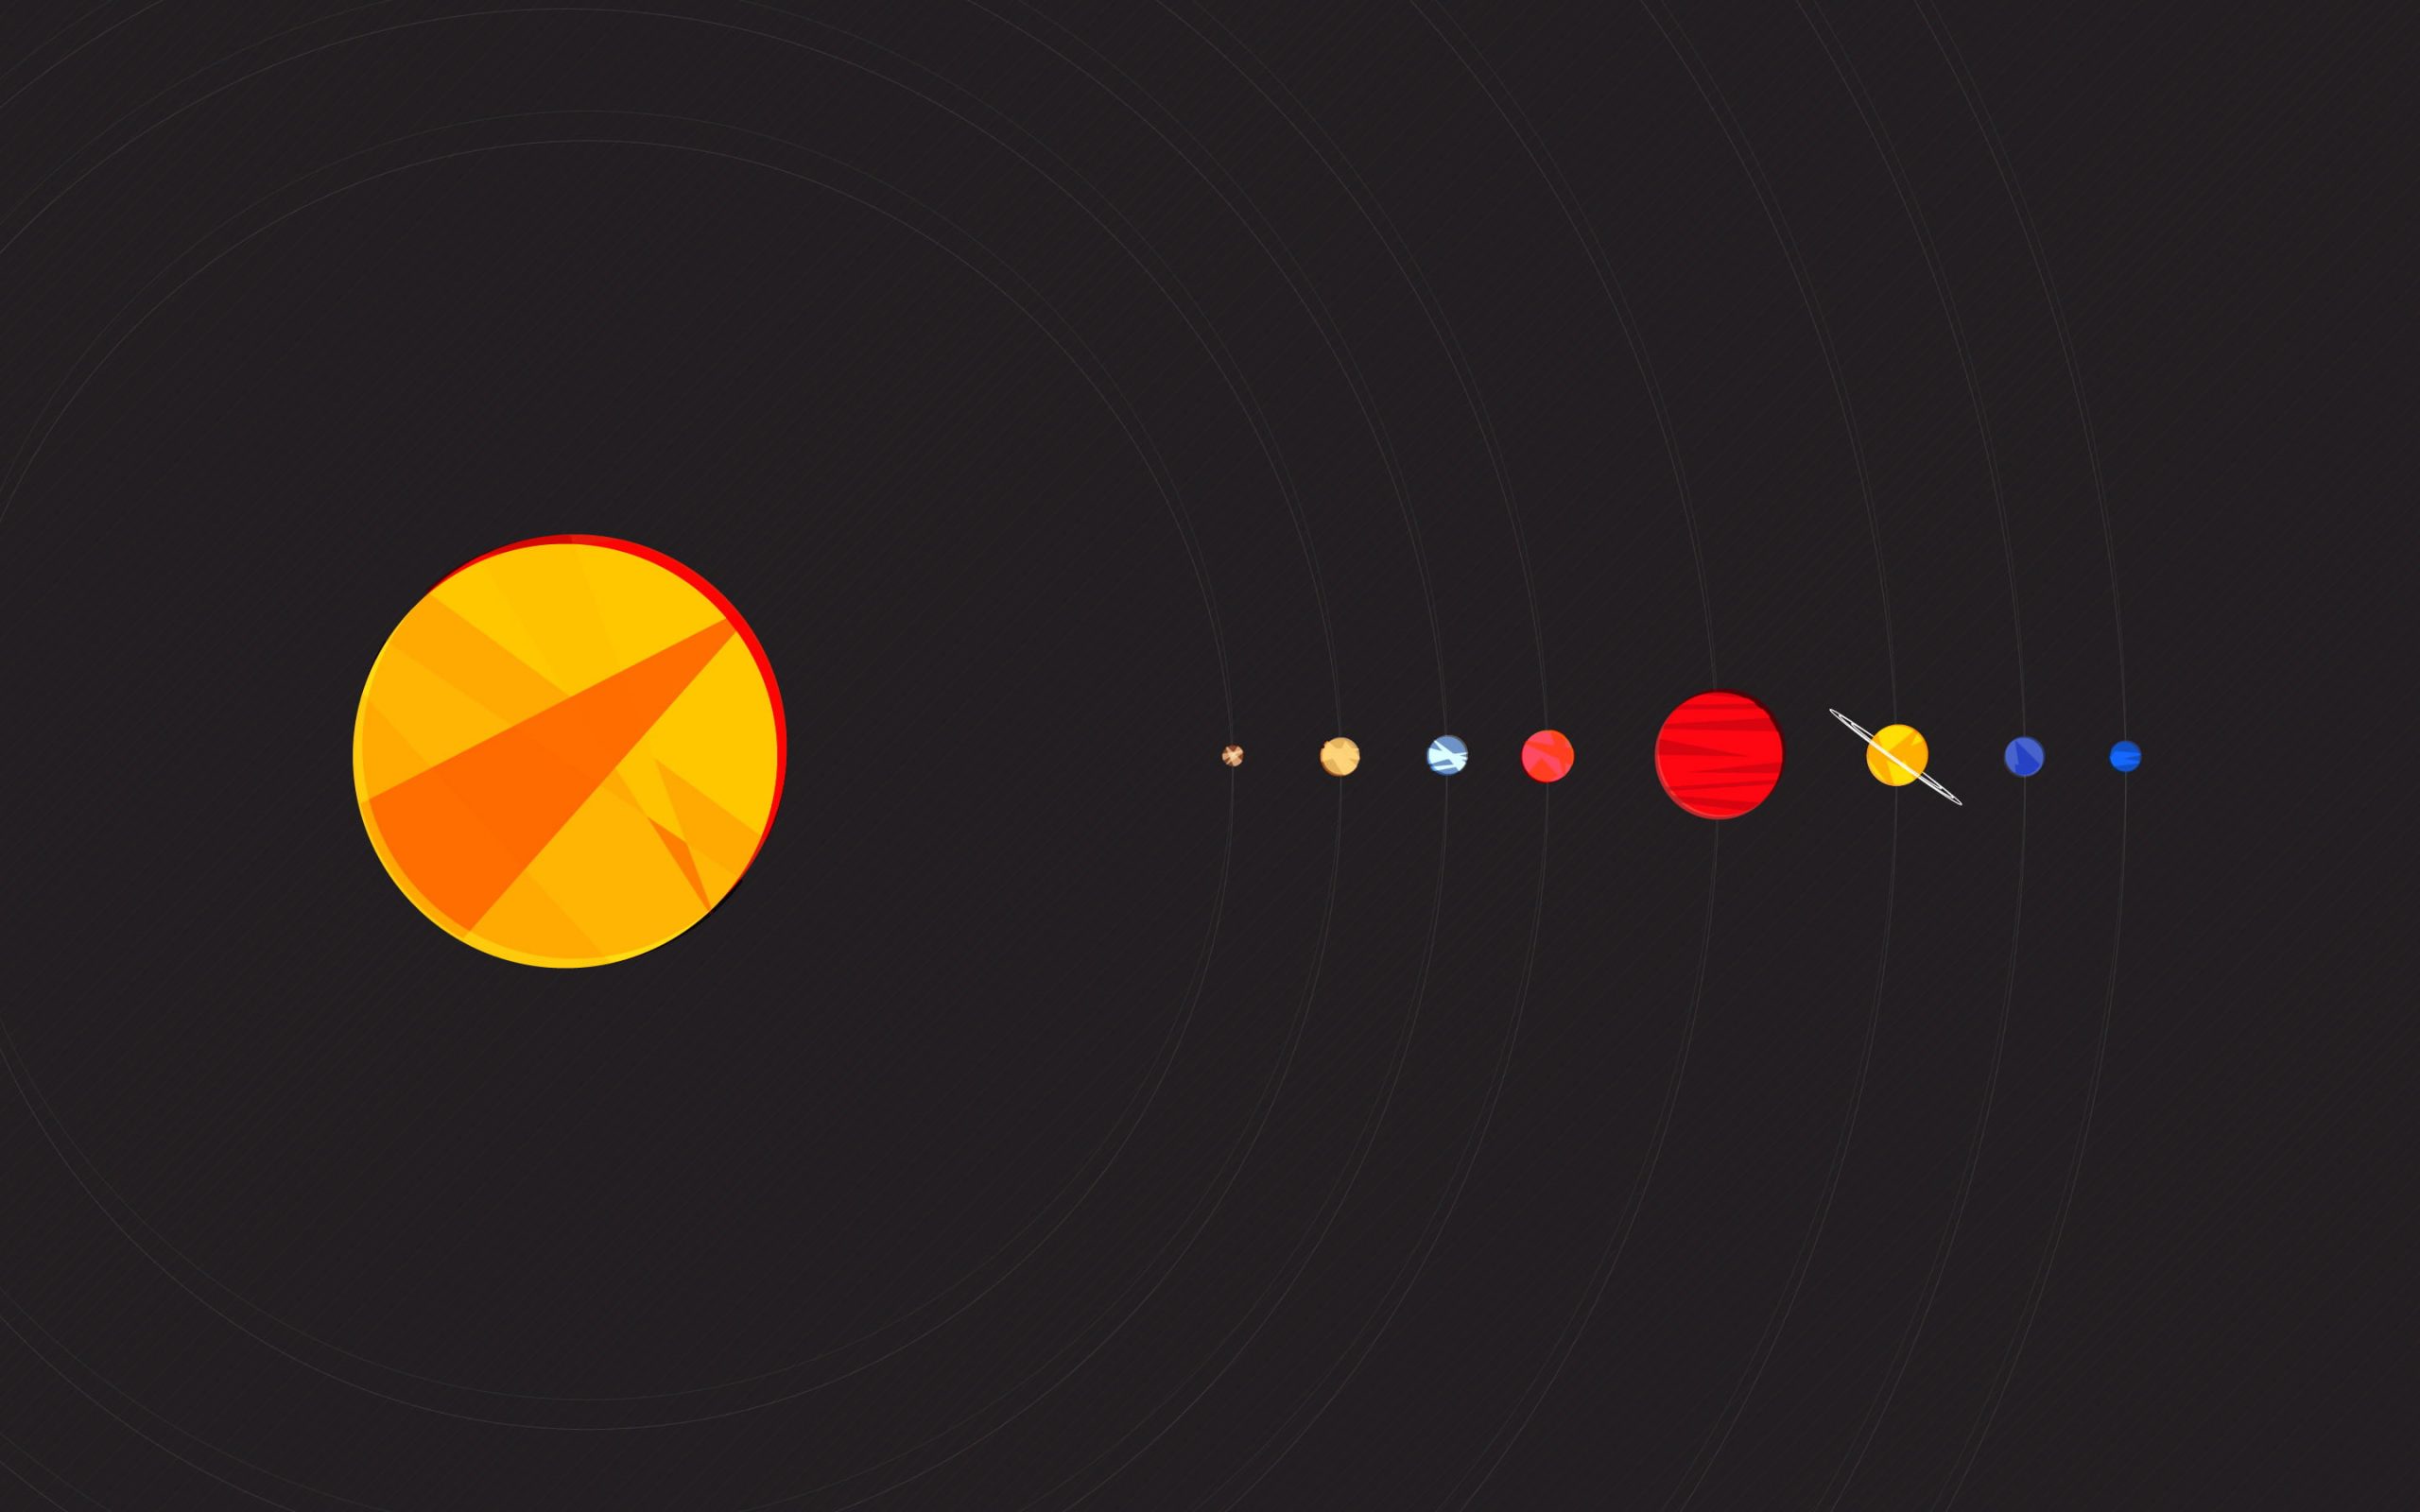 Solar system wallpaper, simple background, minimalism, Sun